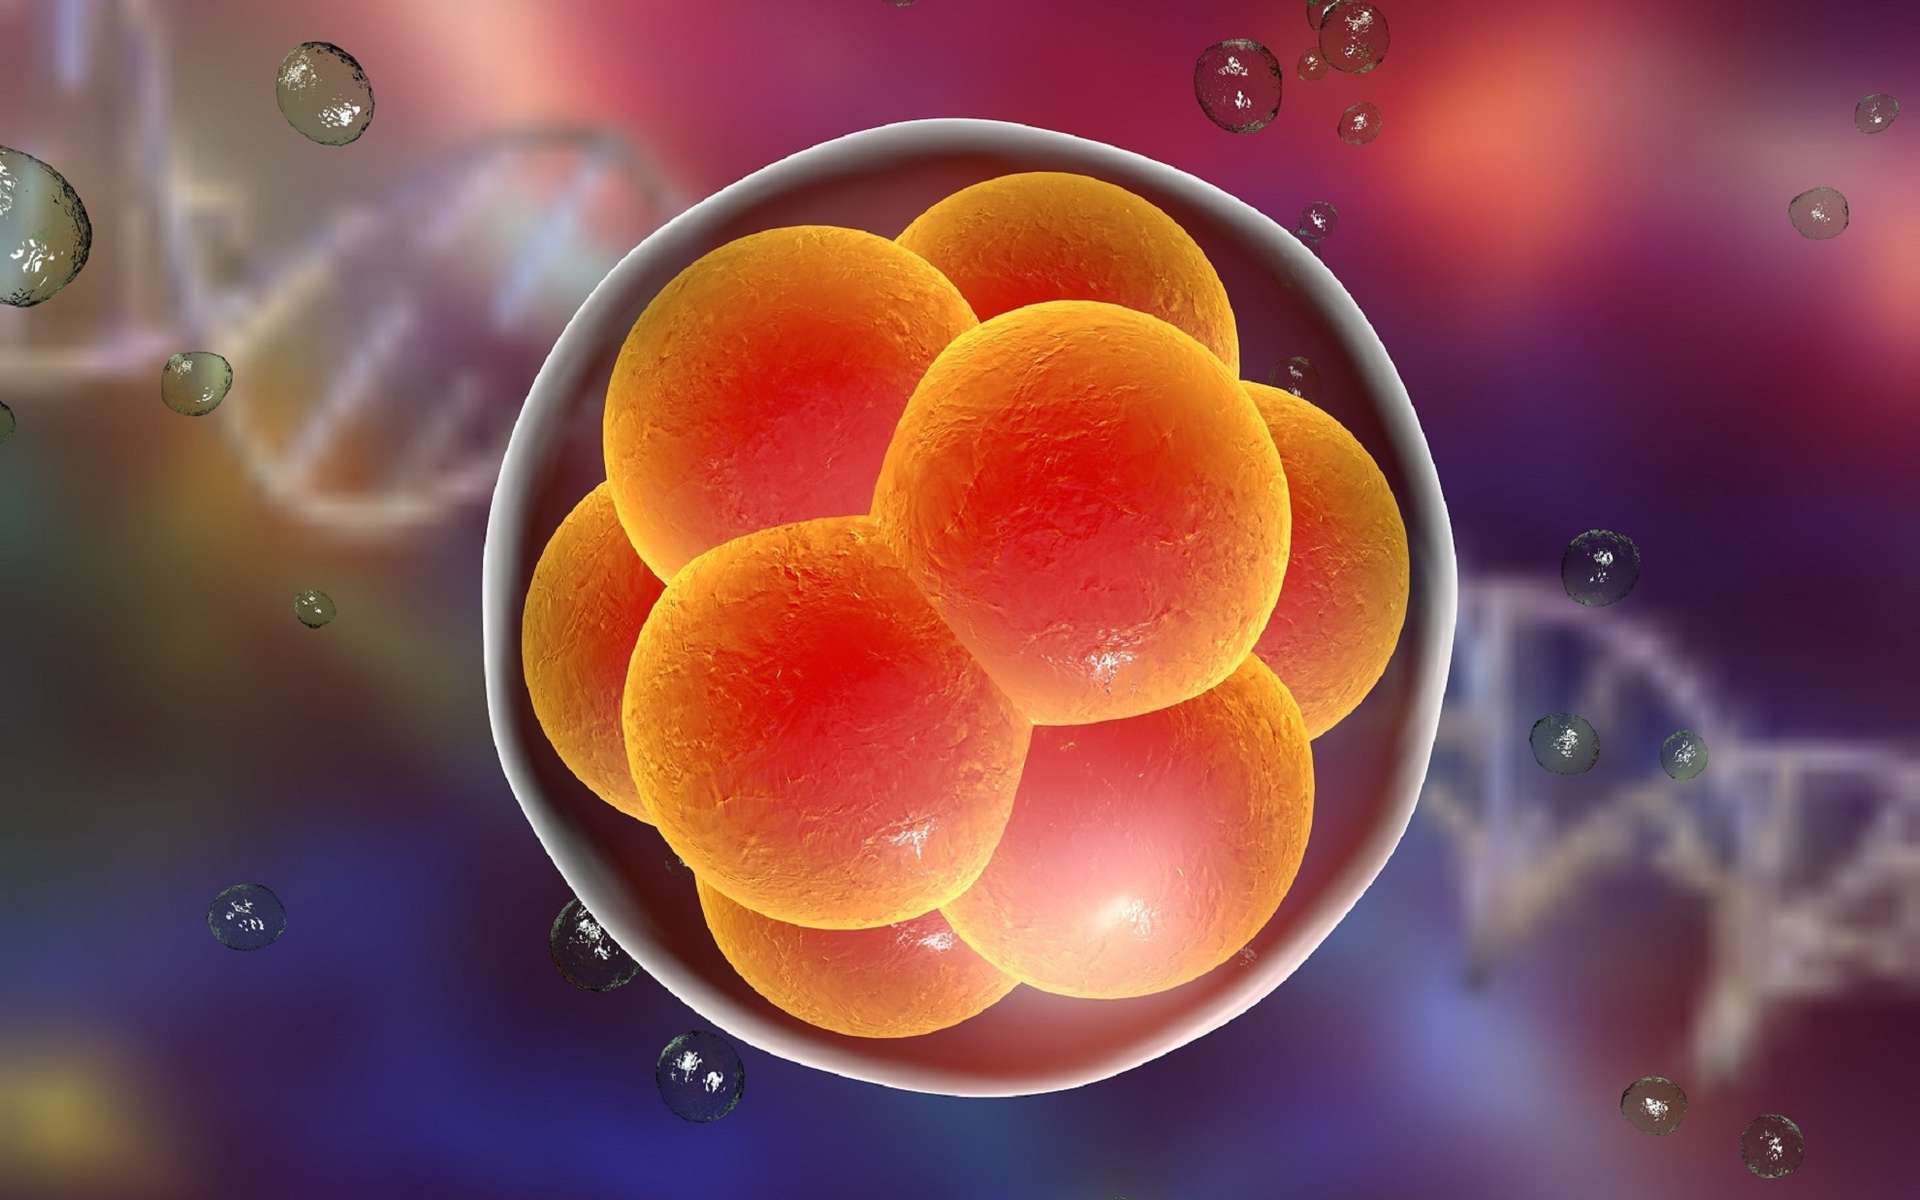 First U.S. team to gene-edit human embryos revealed